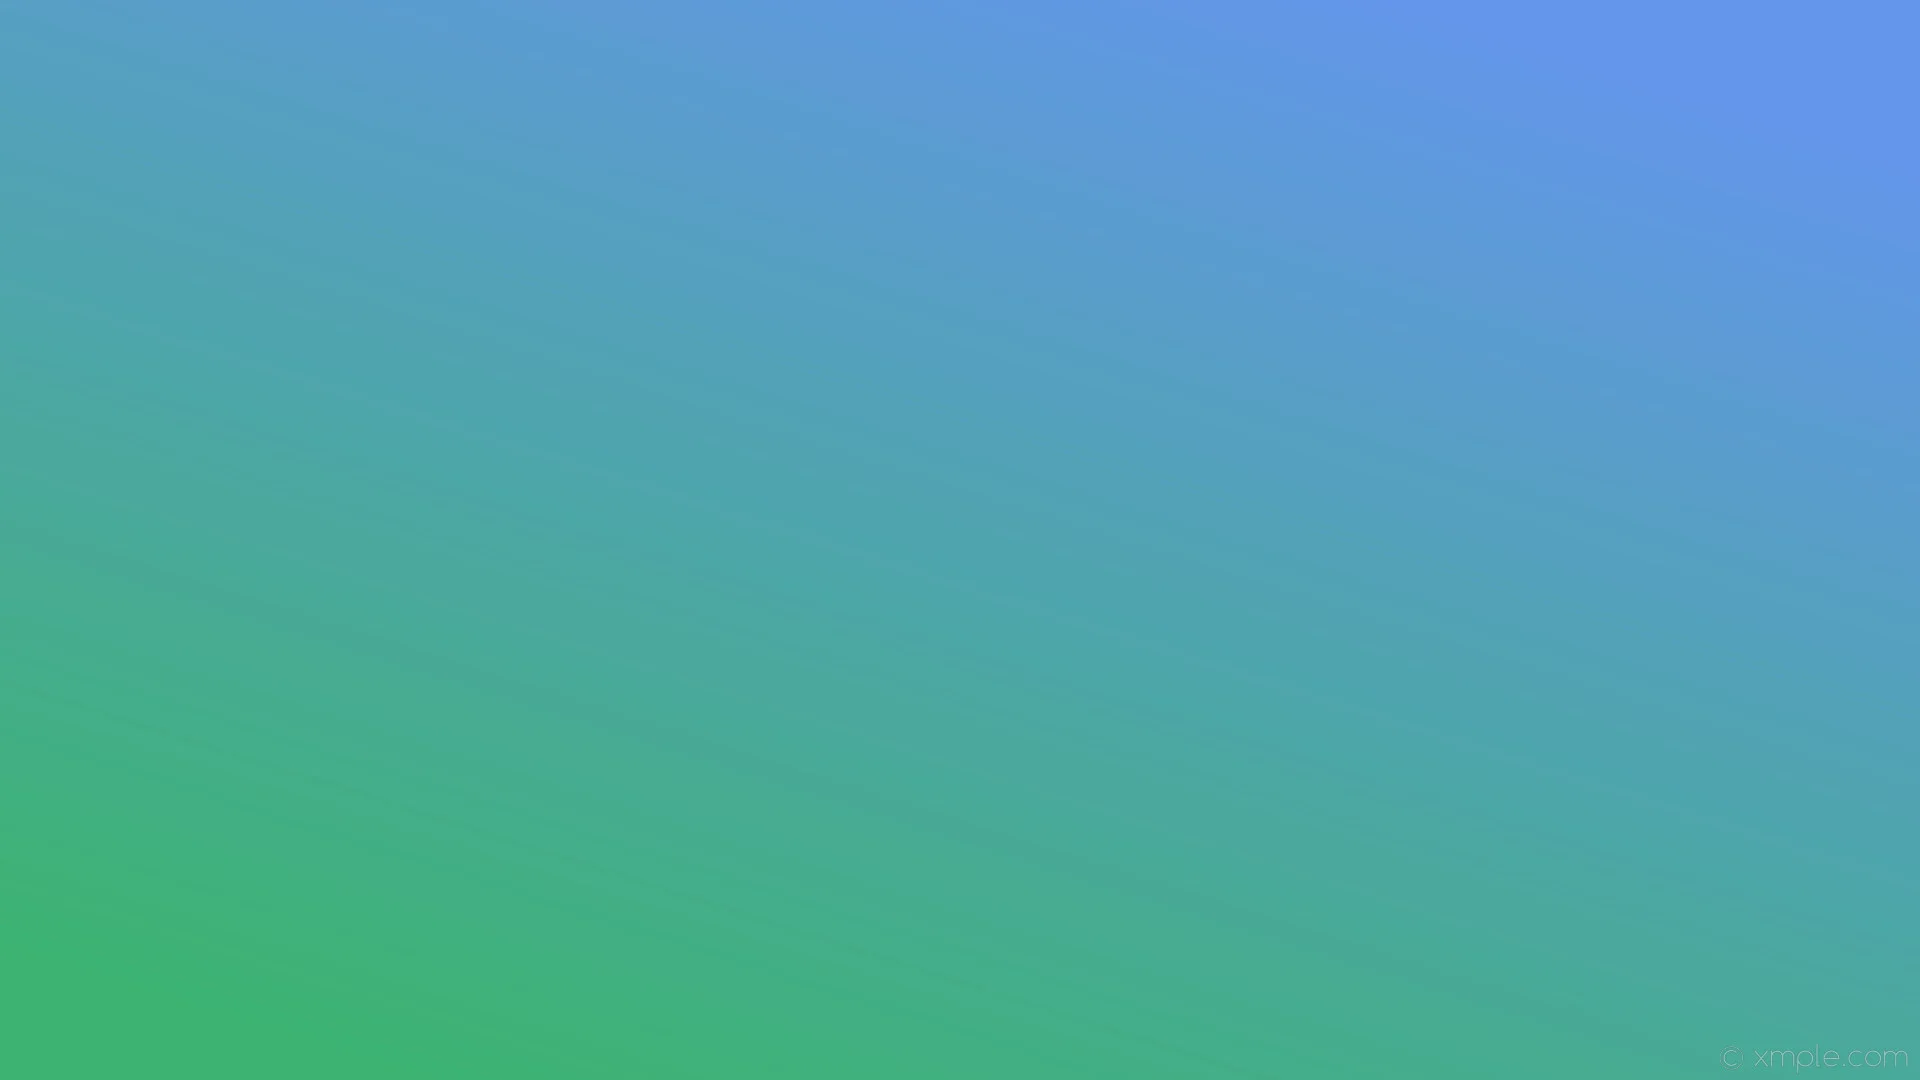 Wallpaper linear green blue gradient cornflower blue medium sea green ed cb371 45